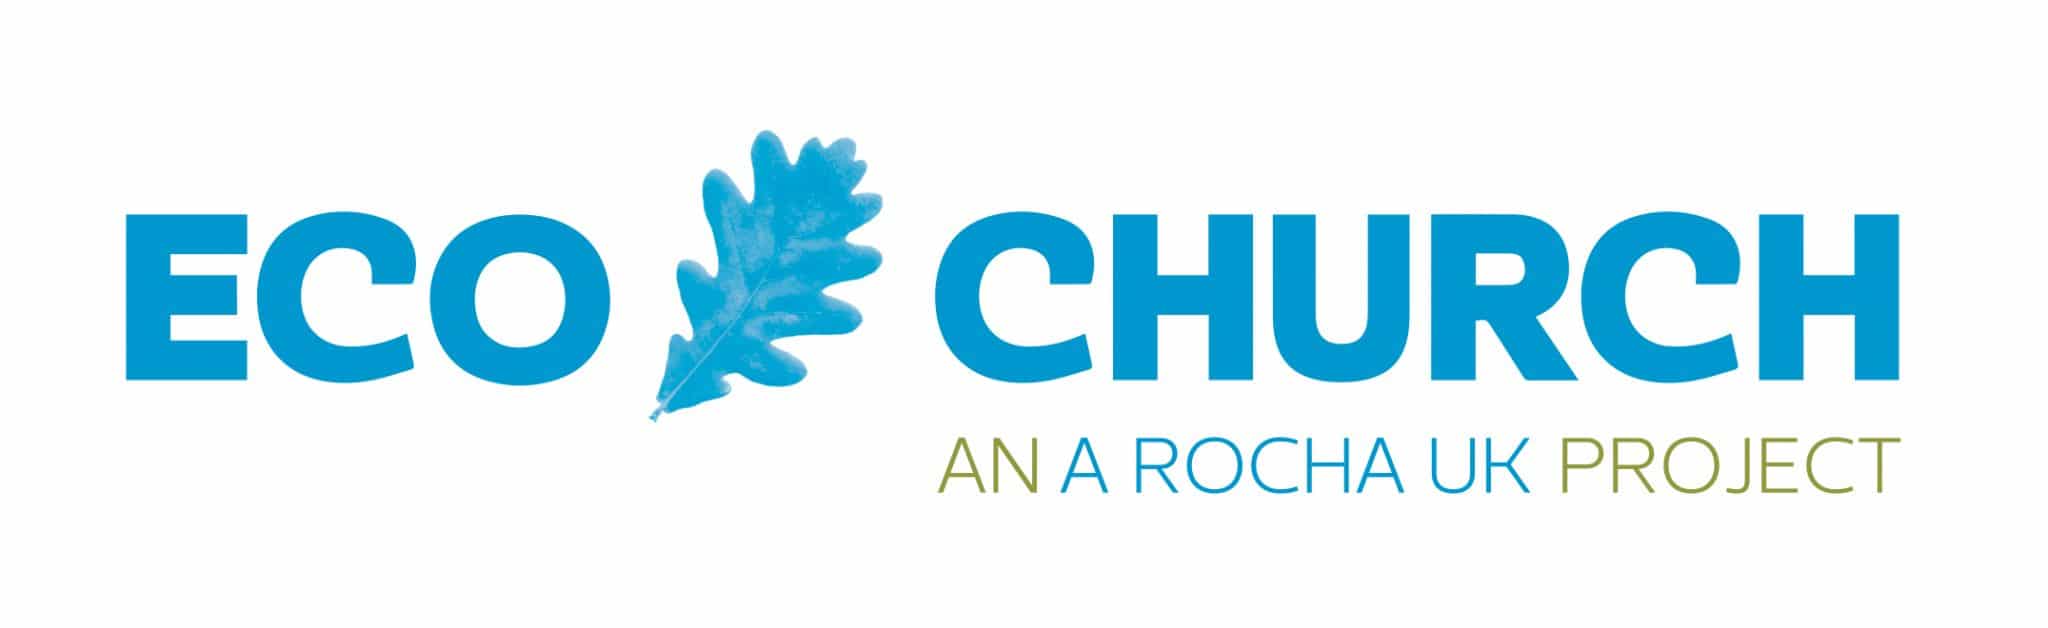 ECO-CHURCH-logo-scaled-1